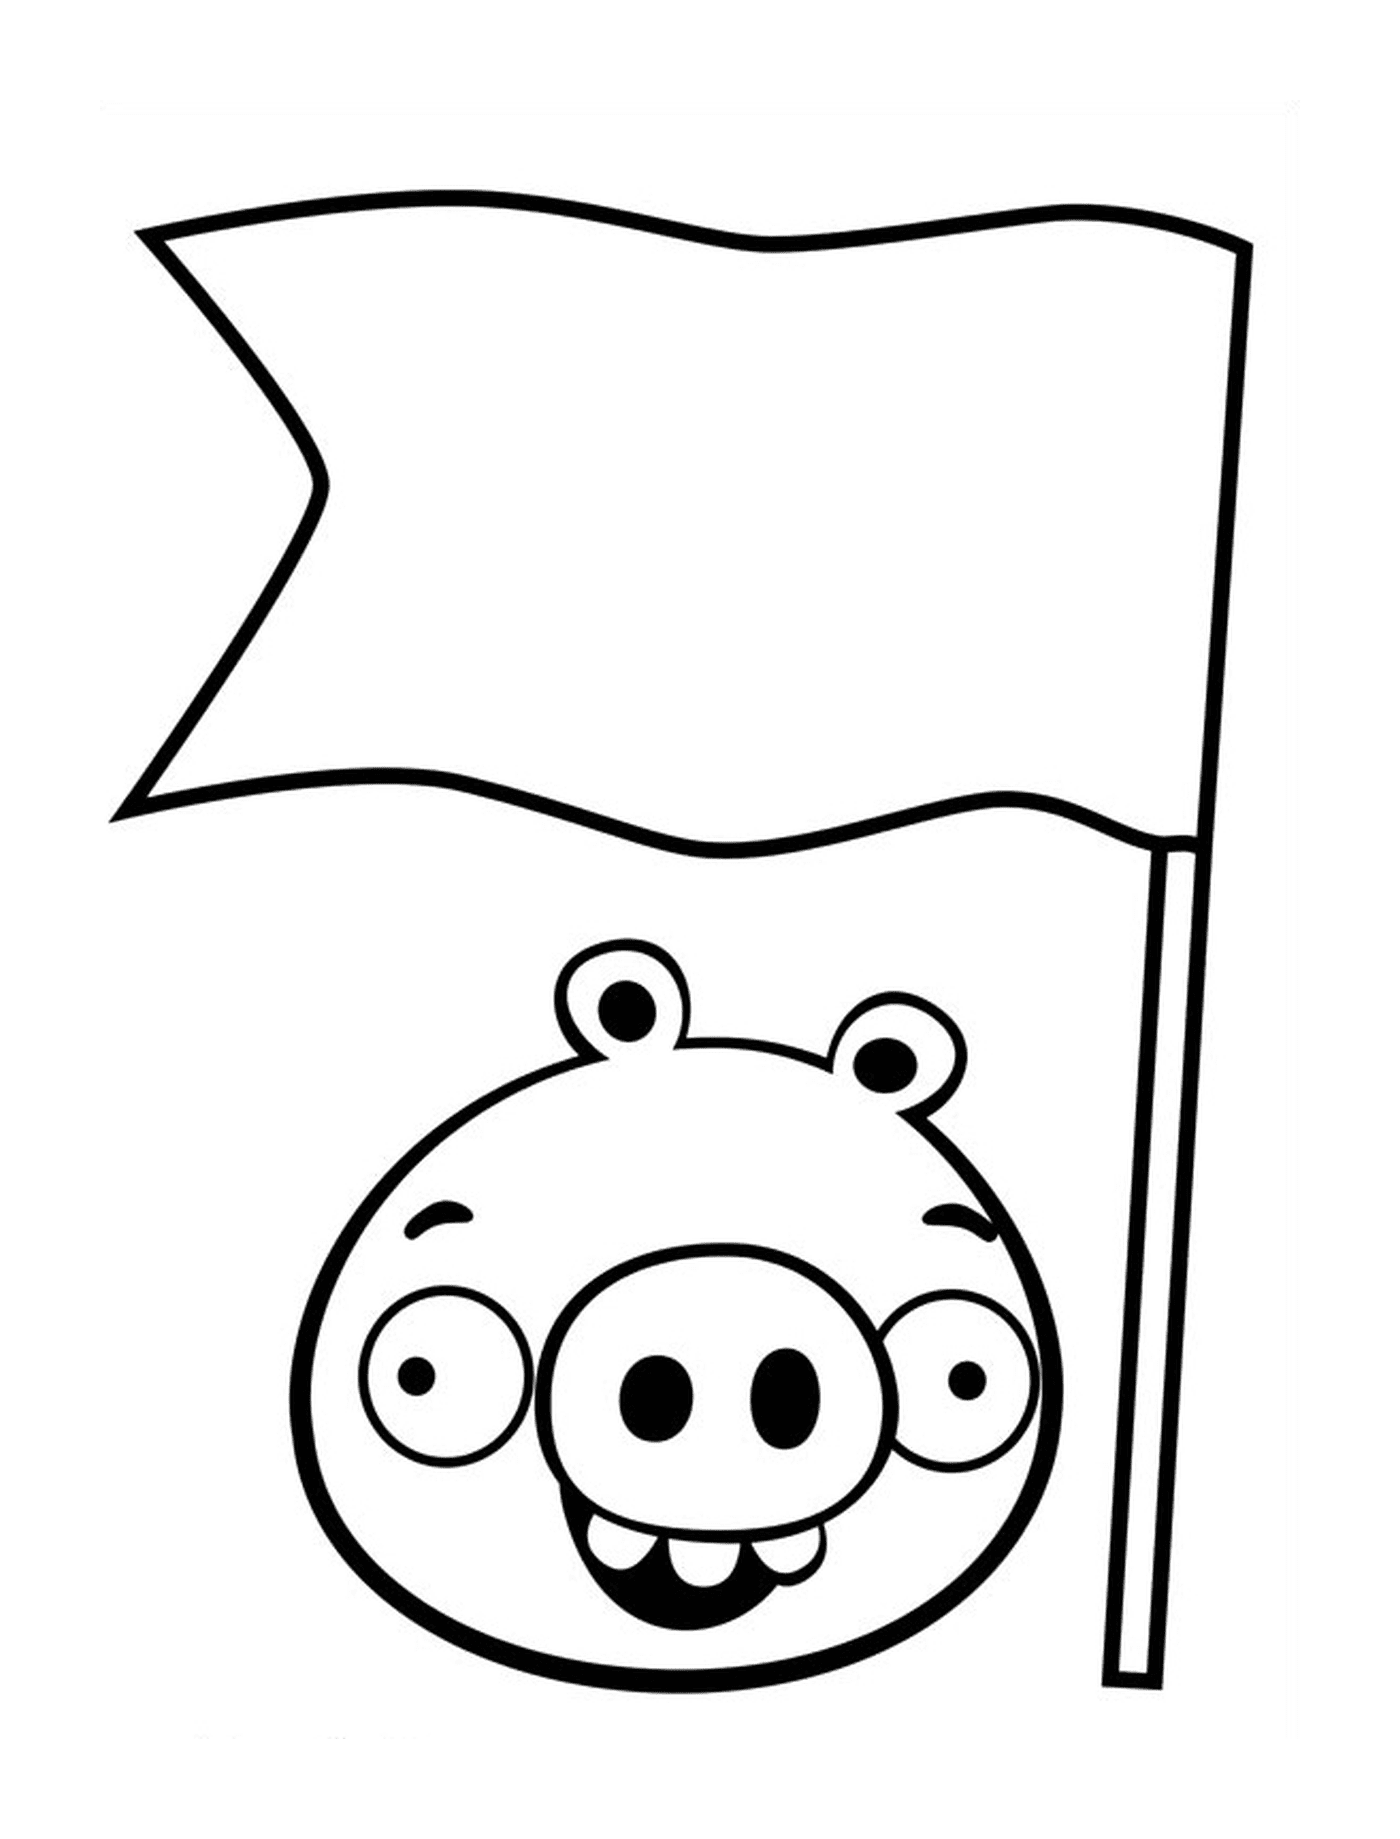  Bandera de cerdo Angry Birds 